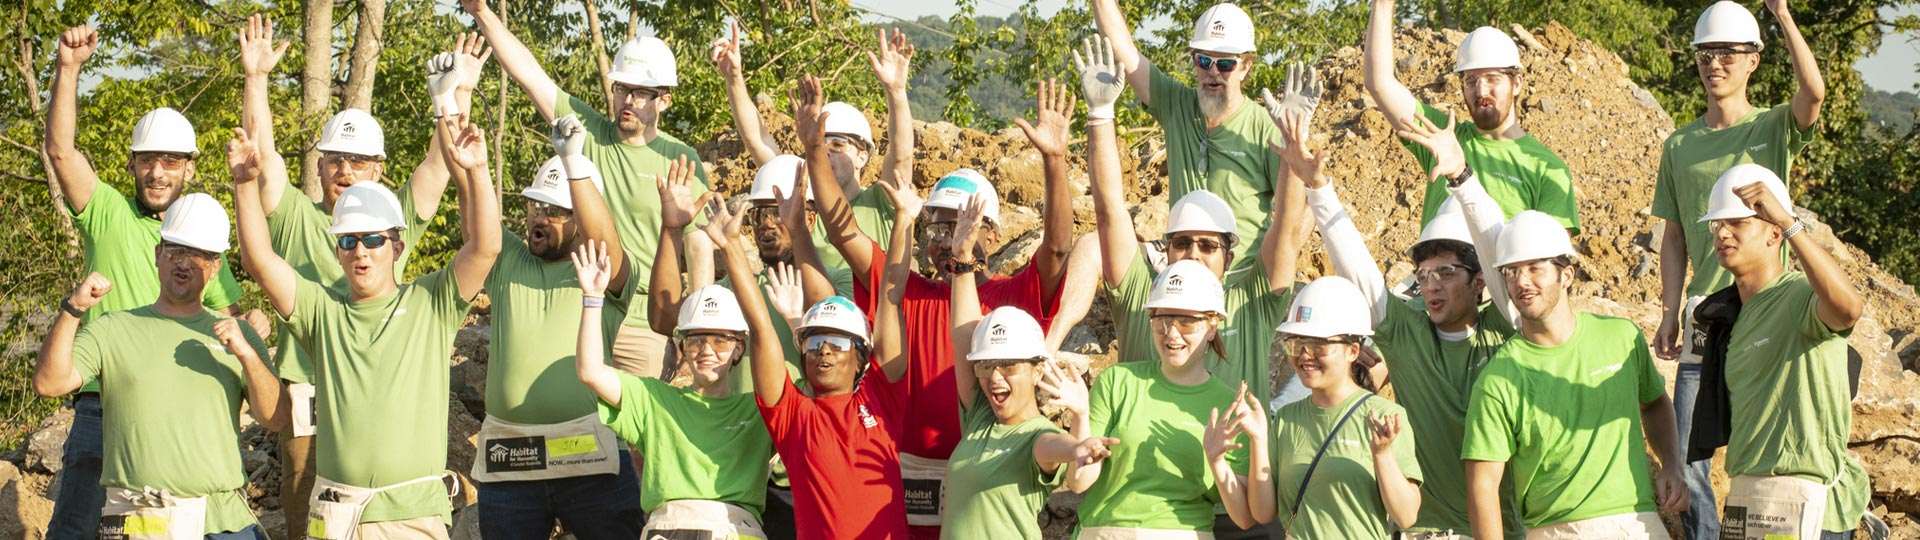 Group of volunteers of Habitat for Humanity raising their hands